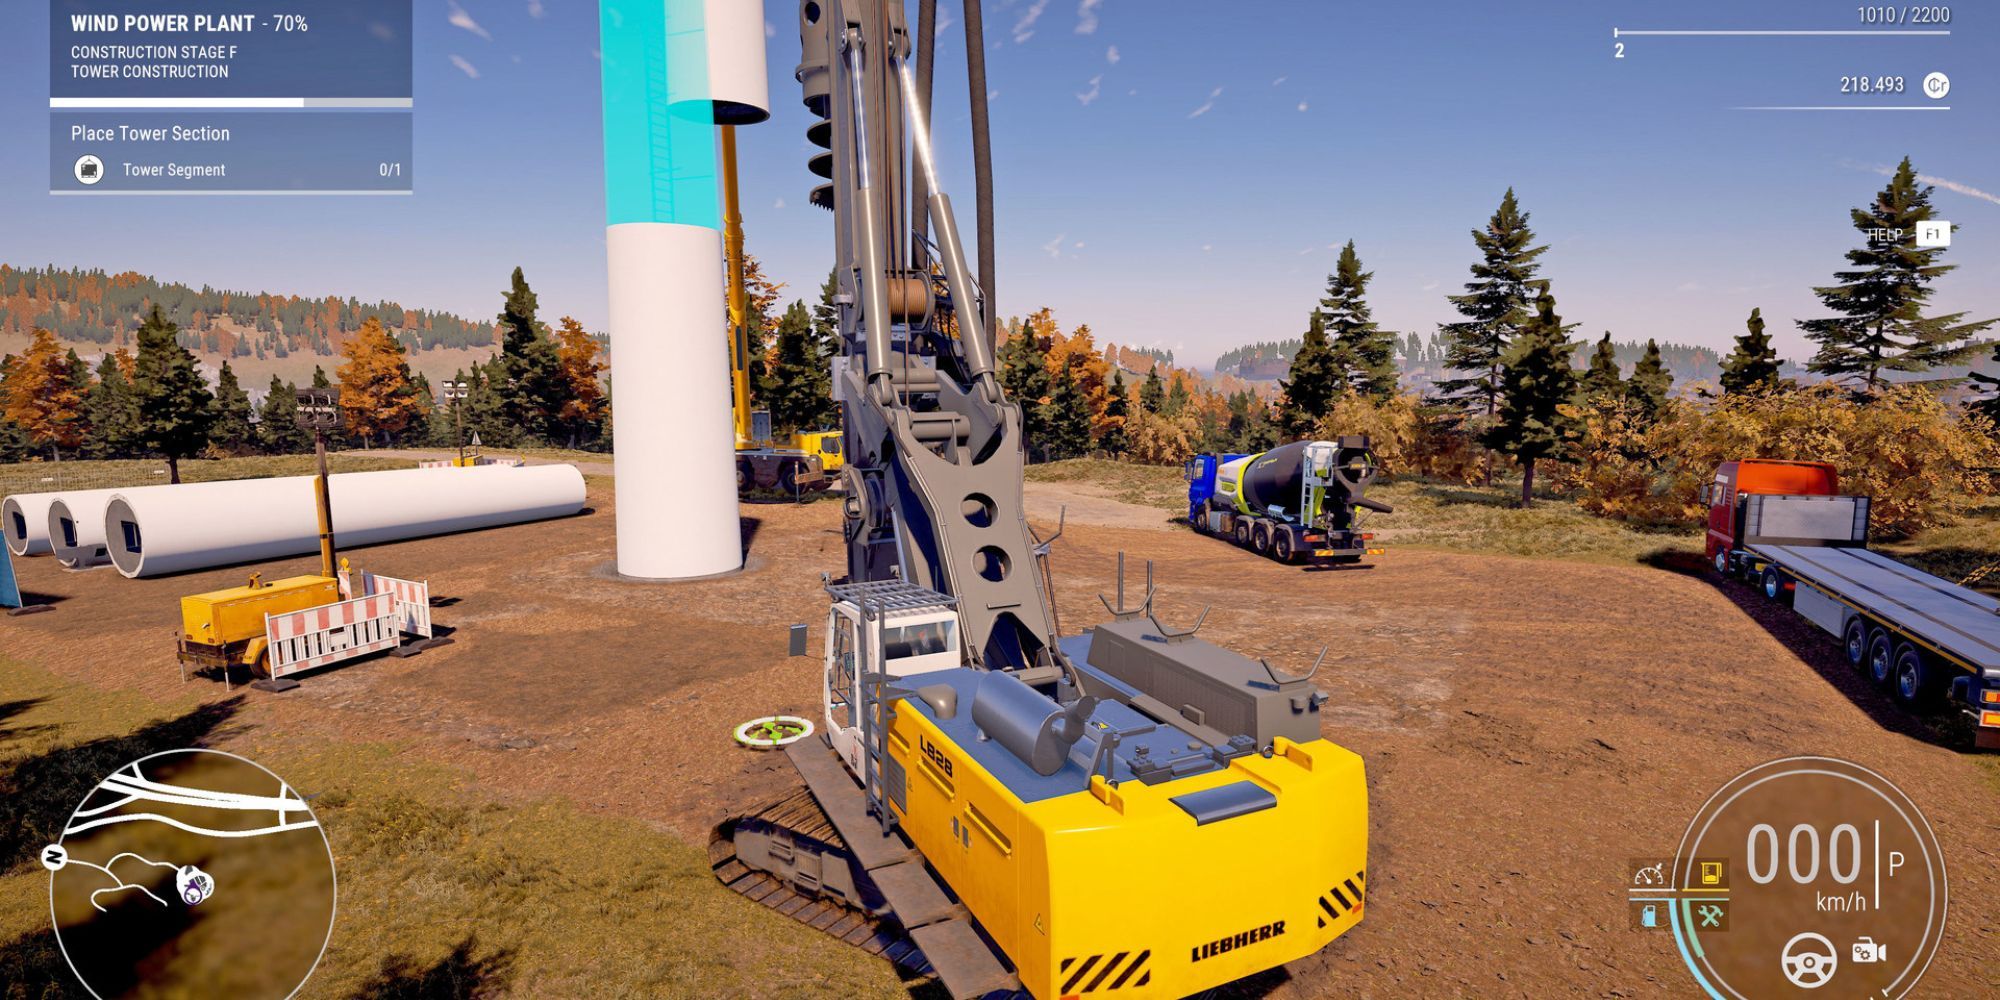 Construction Simulator 2015: Liebherr LB28 - Rotary drilling rig